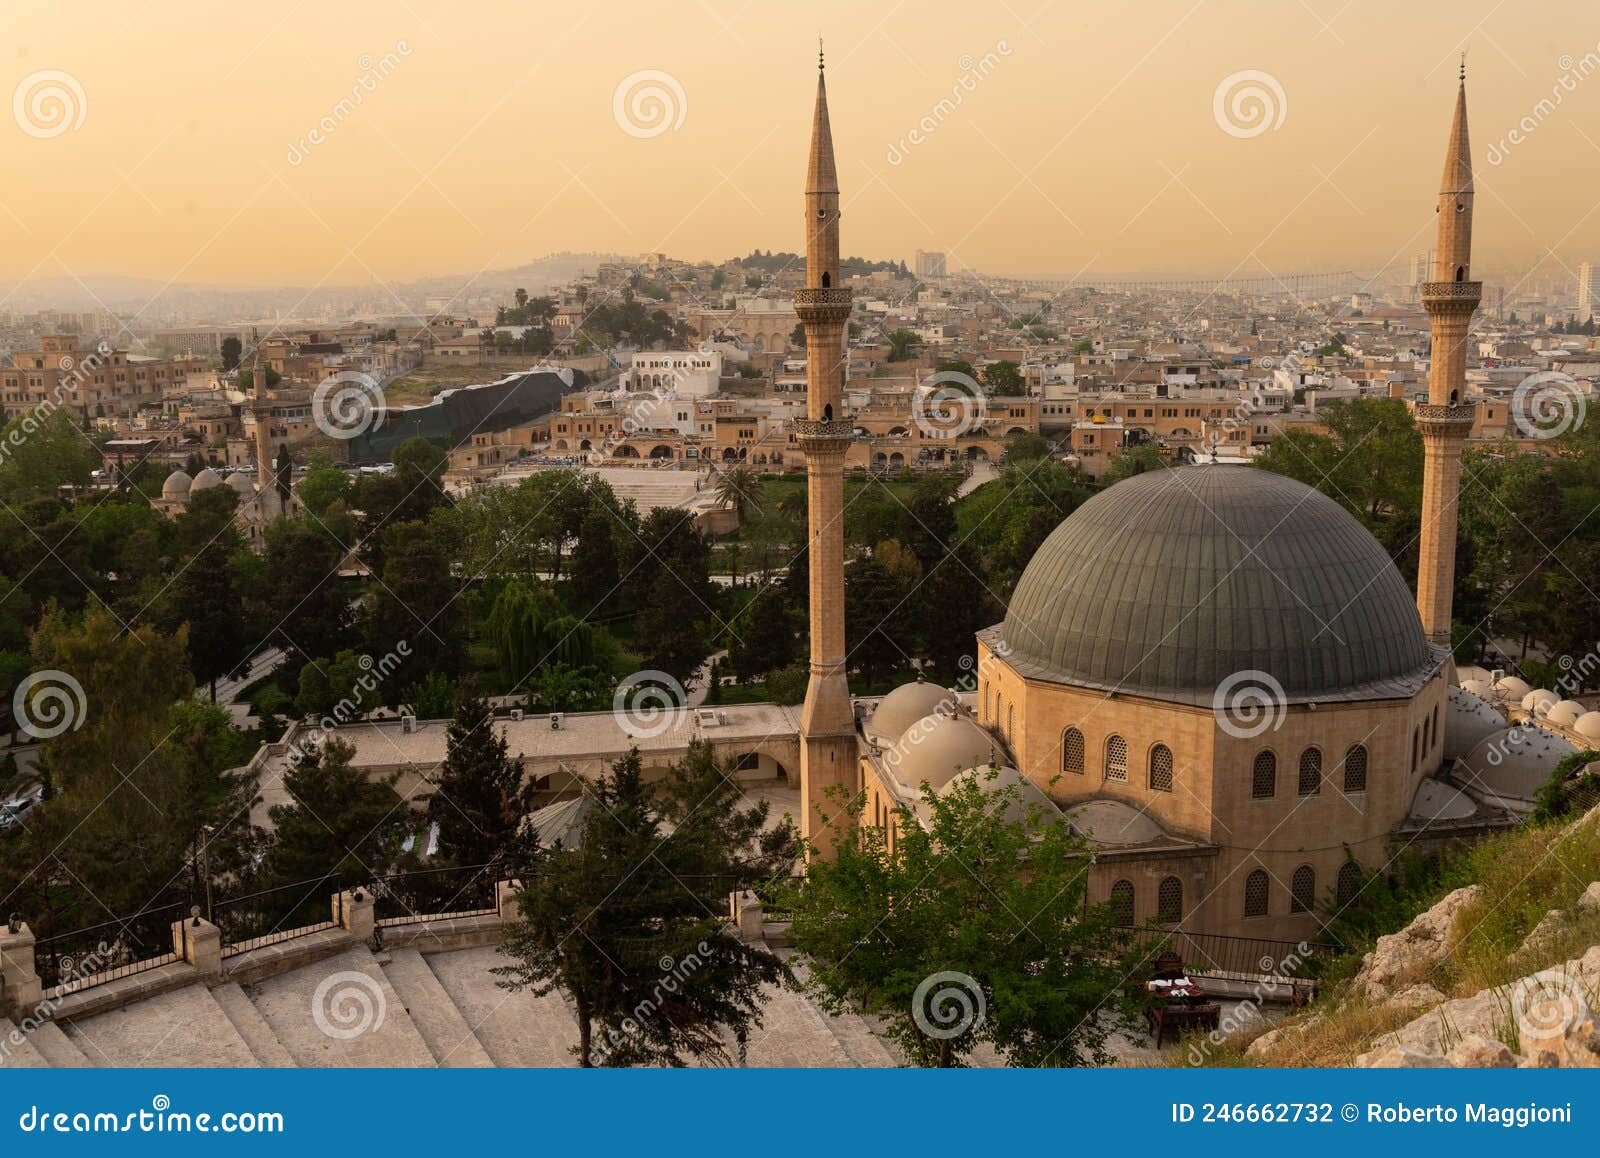 old city of sanliurfa, turkey. mevlidi halil cami mosque and minarets at dusk.